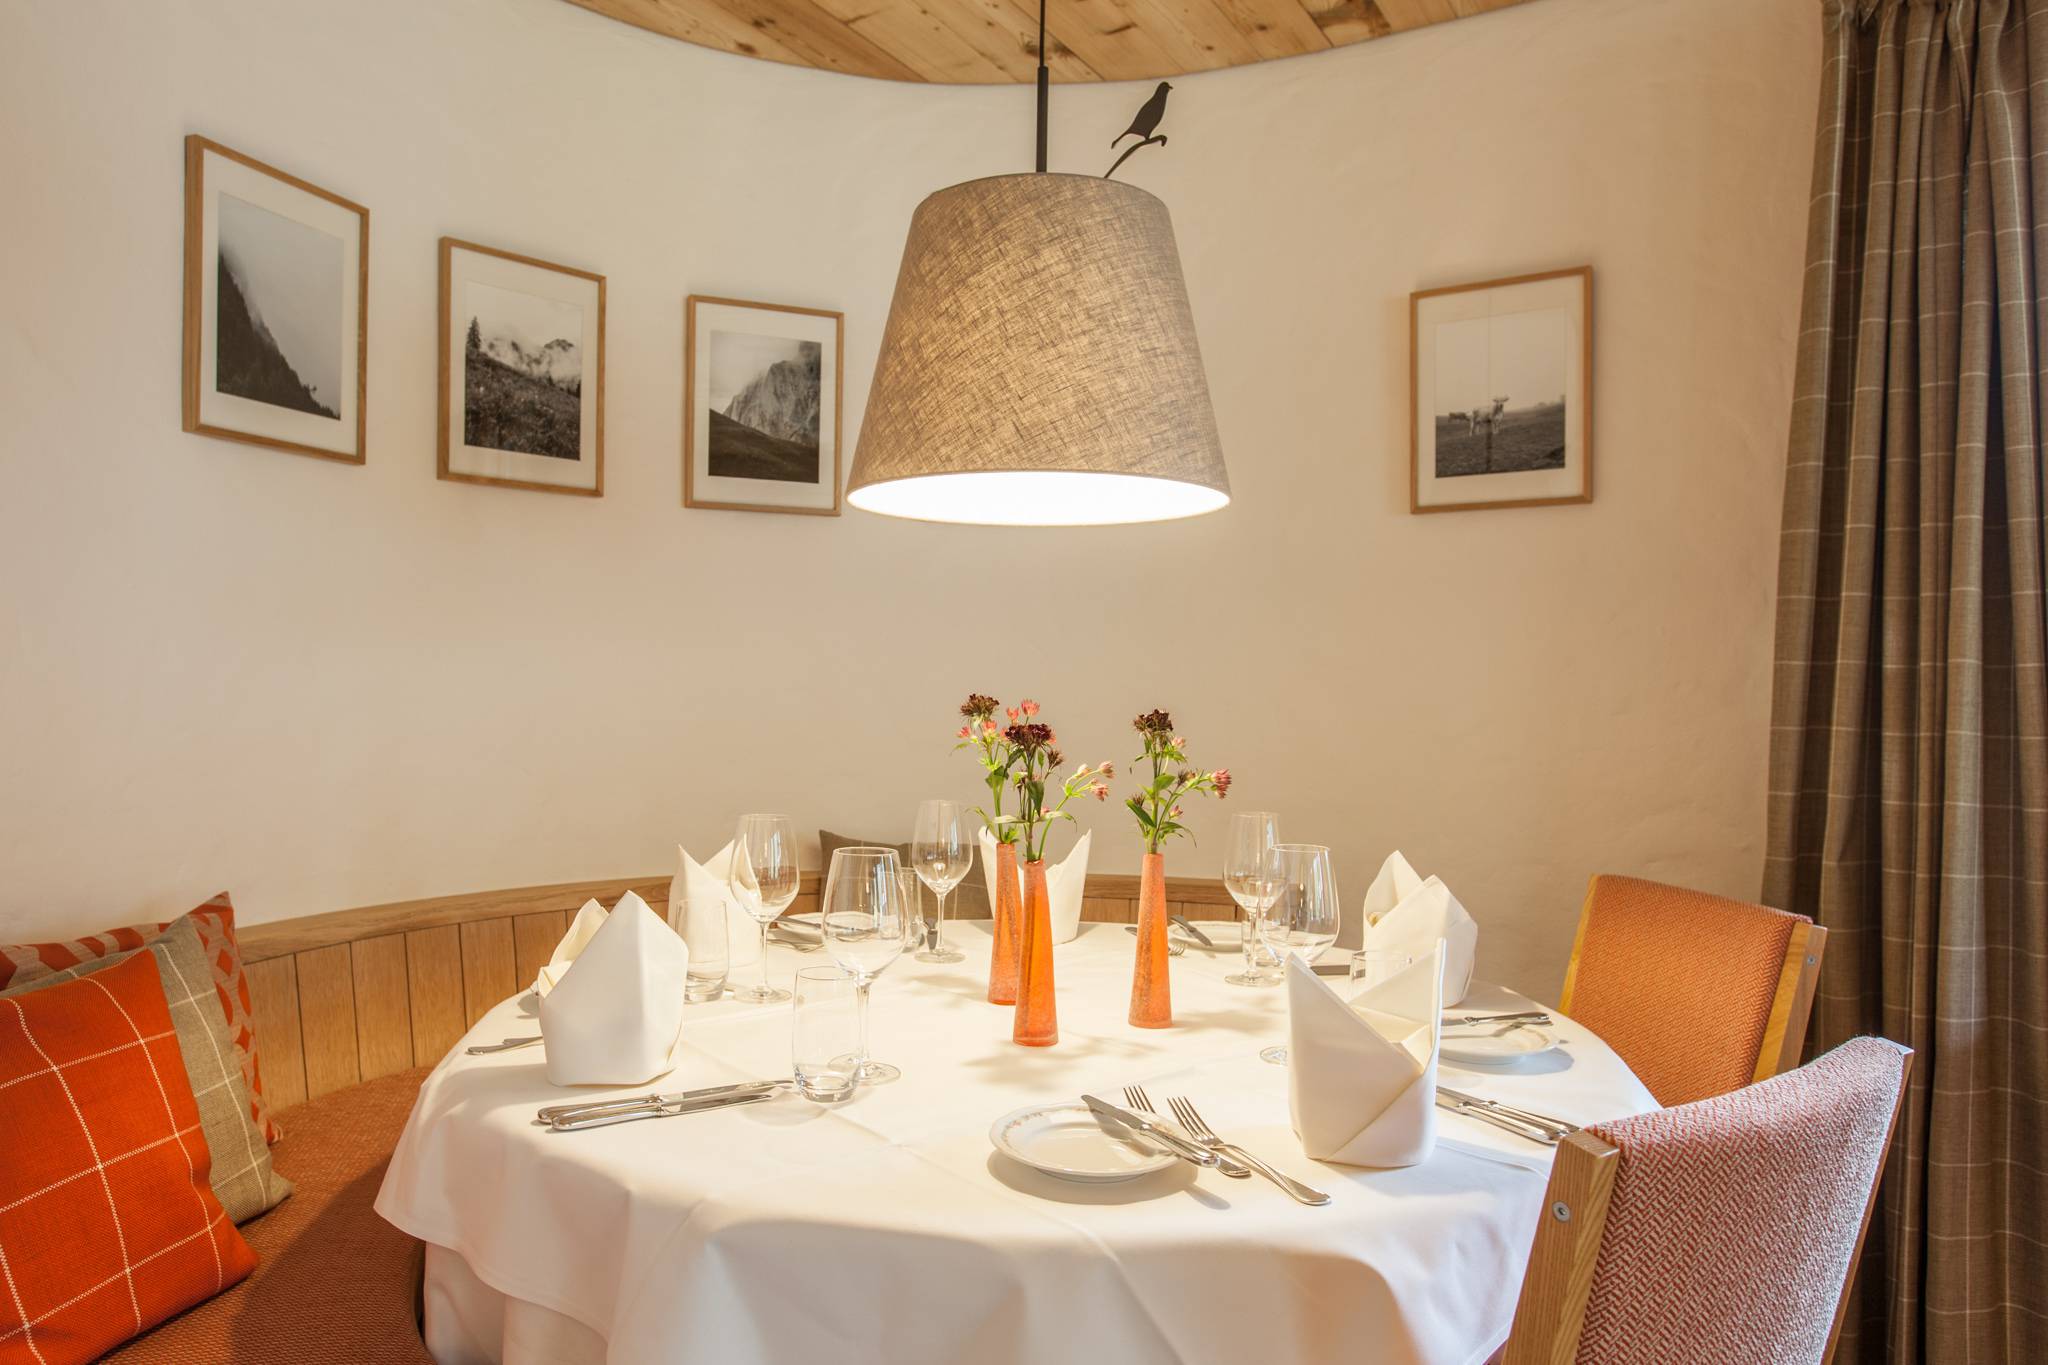 Cuisine raffinée et fondue & raclette: Restaurant Müli & Saagi-Stübli - Hotel Gstaaderhof